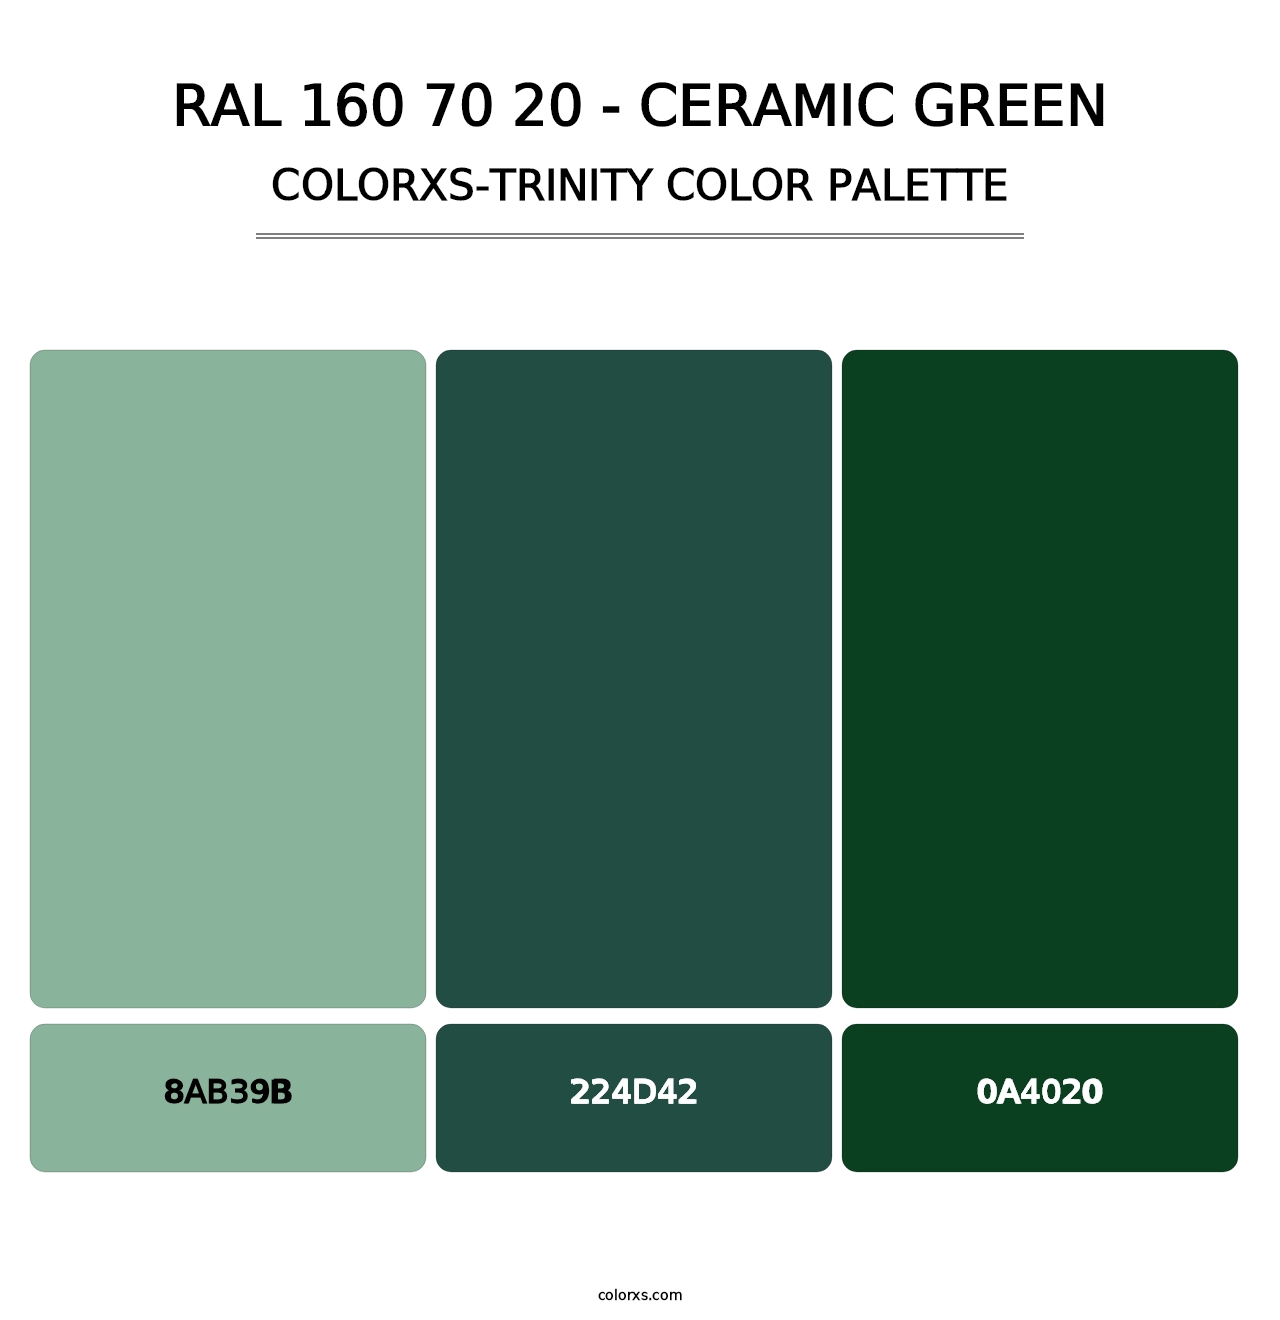 RAL 160 70 20 - Ceramic Green - Colorxs Trinity Palette